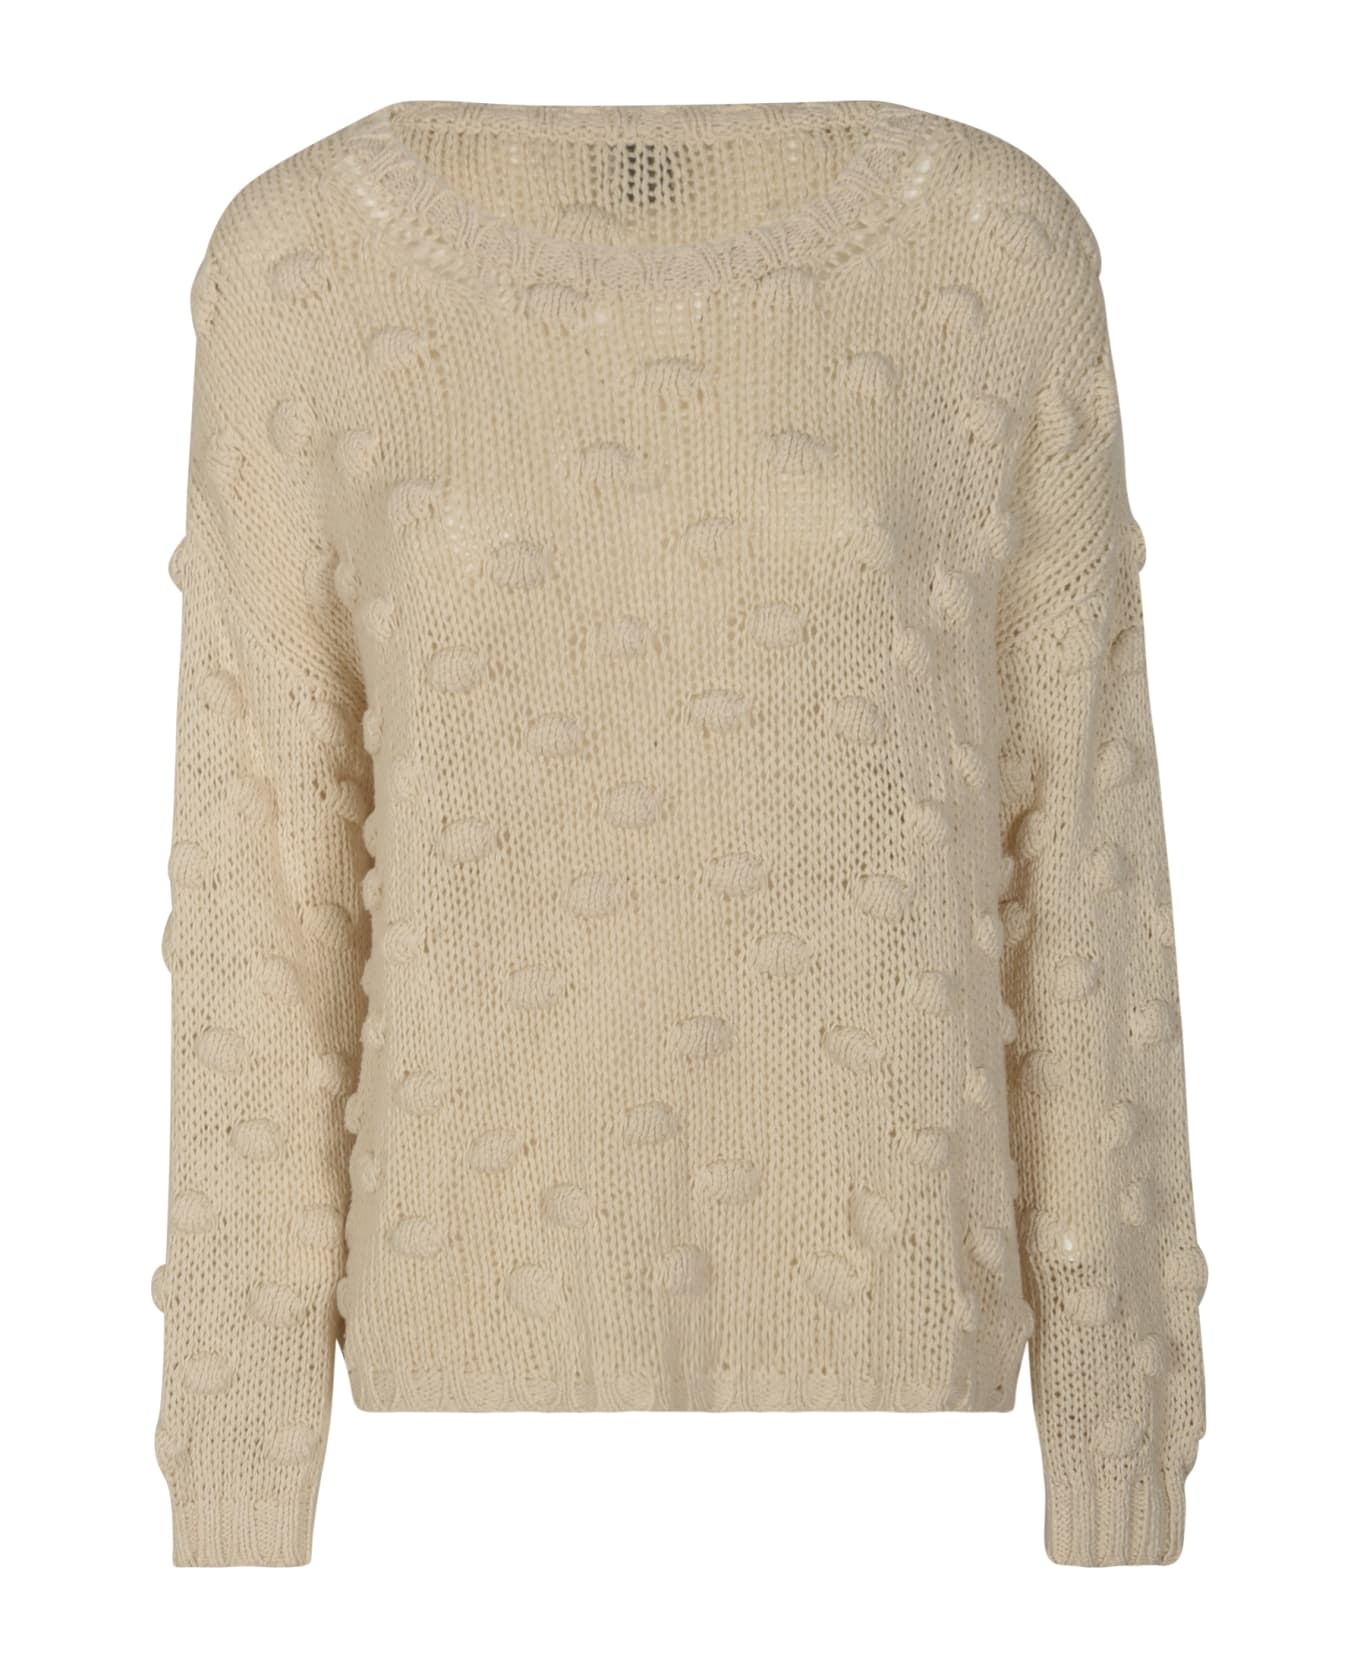 f cashmere Polpo Sweater - Ivory